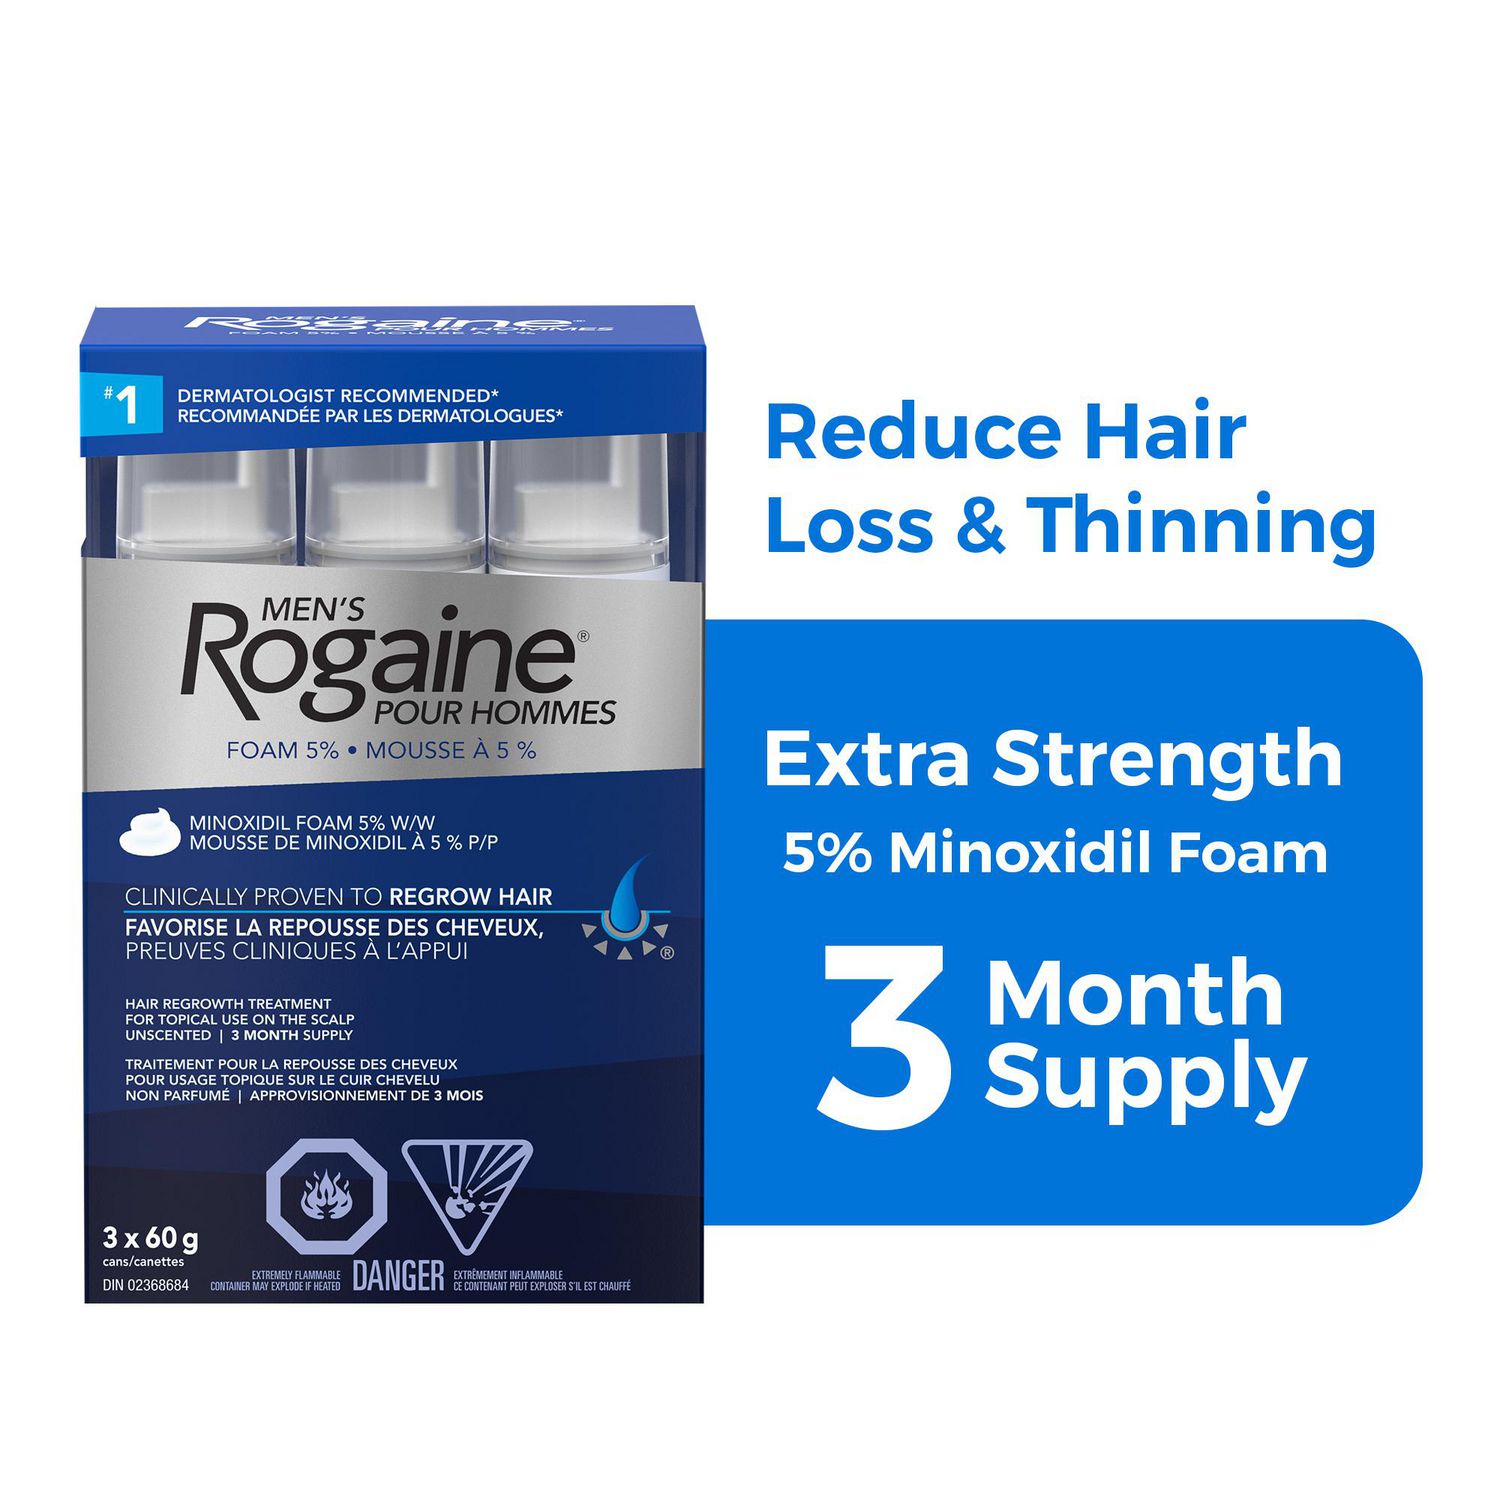 Growth Treatment Men - Reduce Hair Loss & Thinning - 5% Minoxidil Foam - Month Supply, 3x 60g. | Walmart Canada